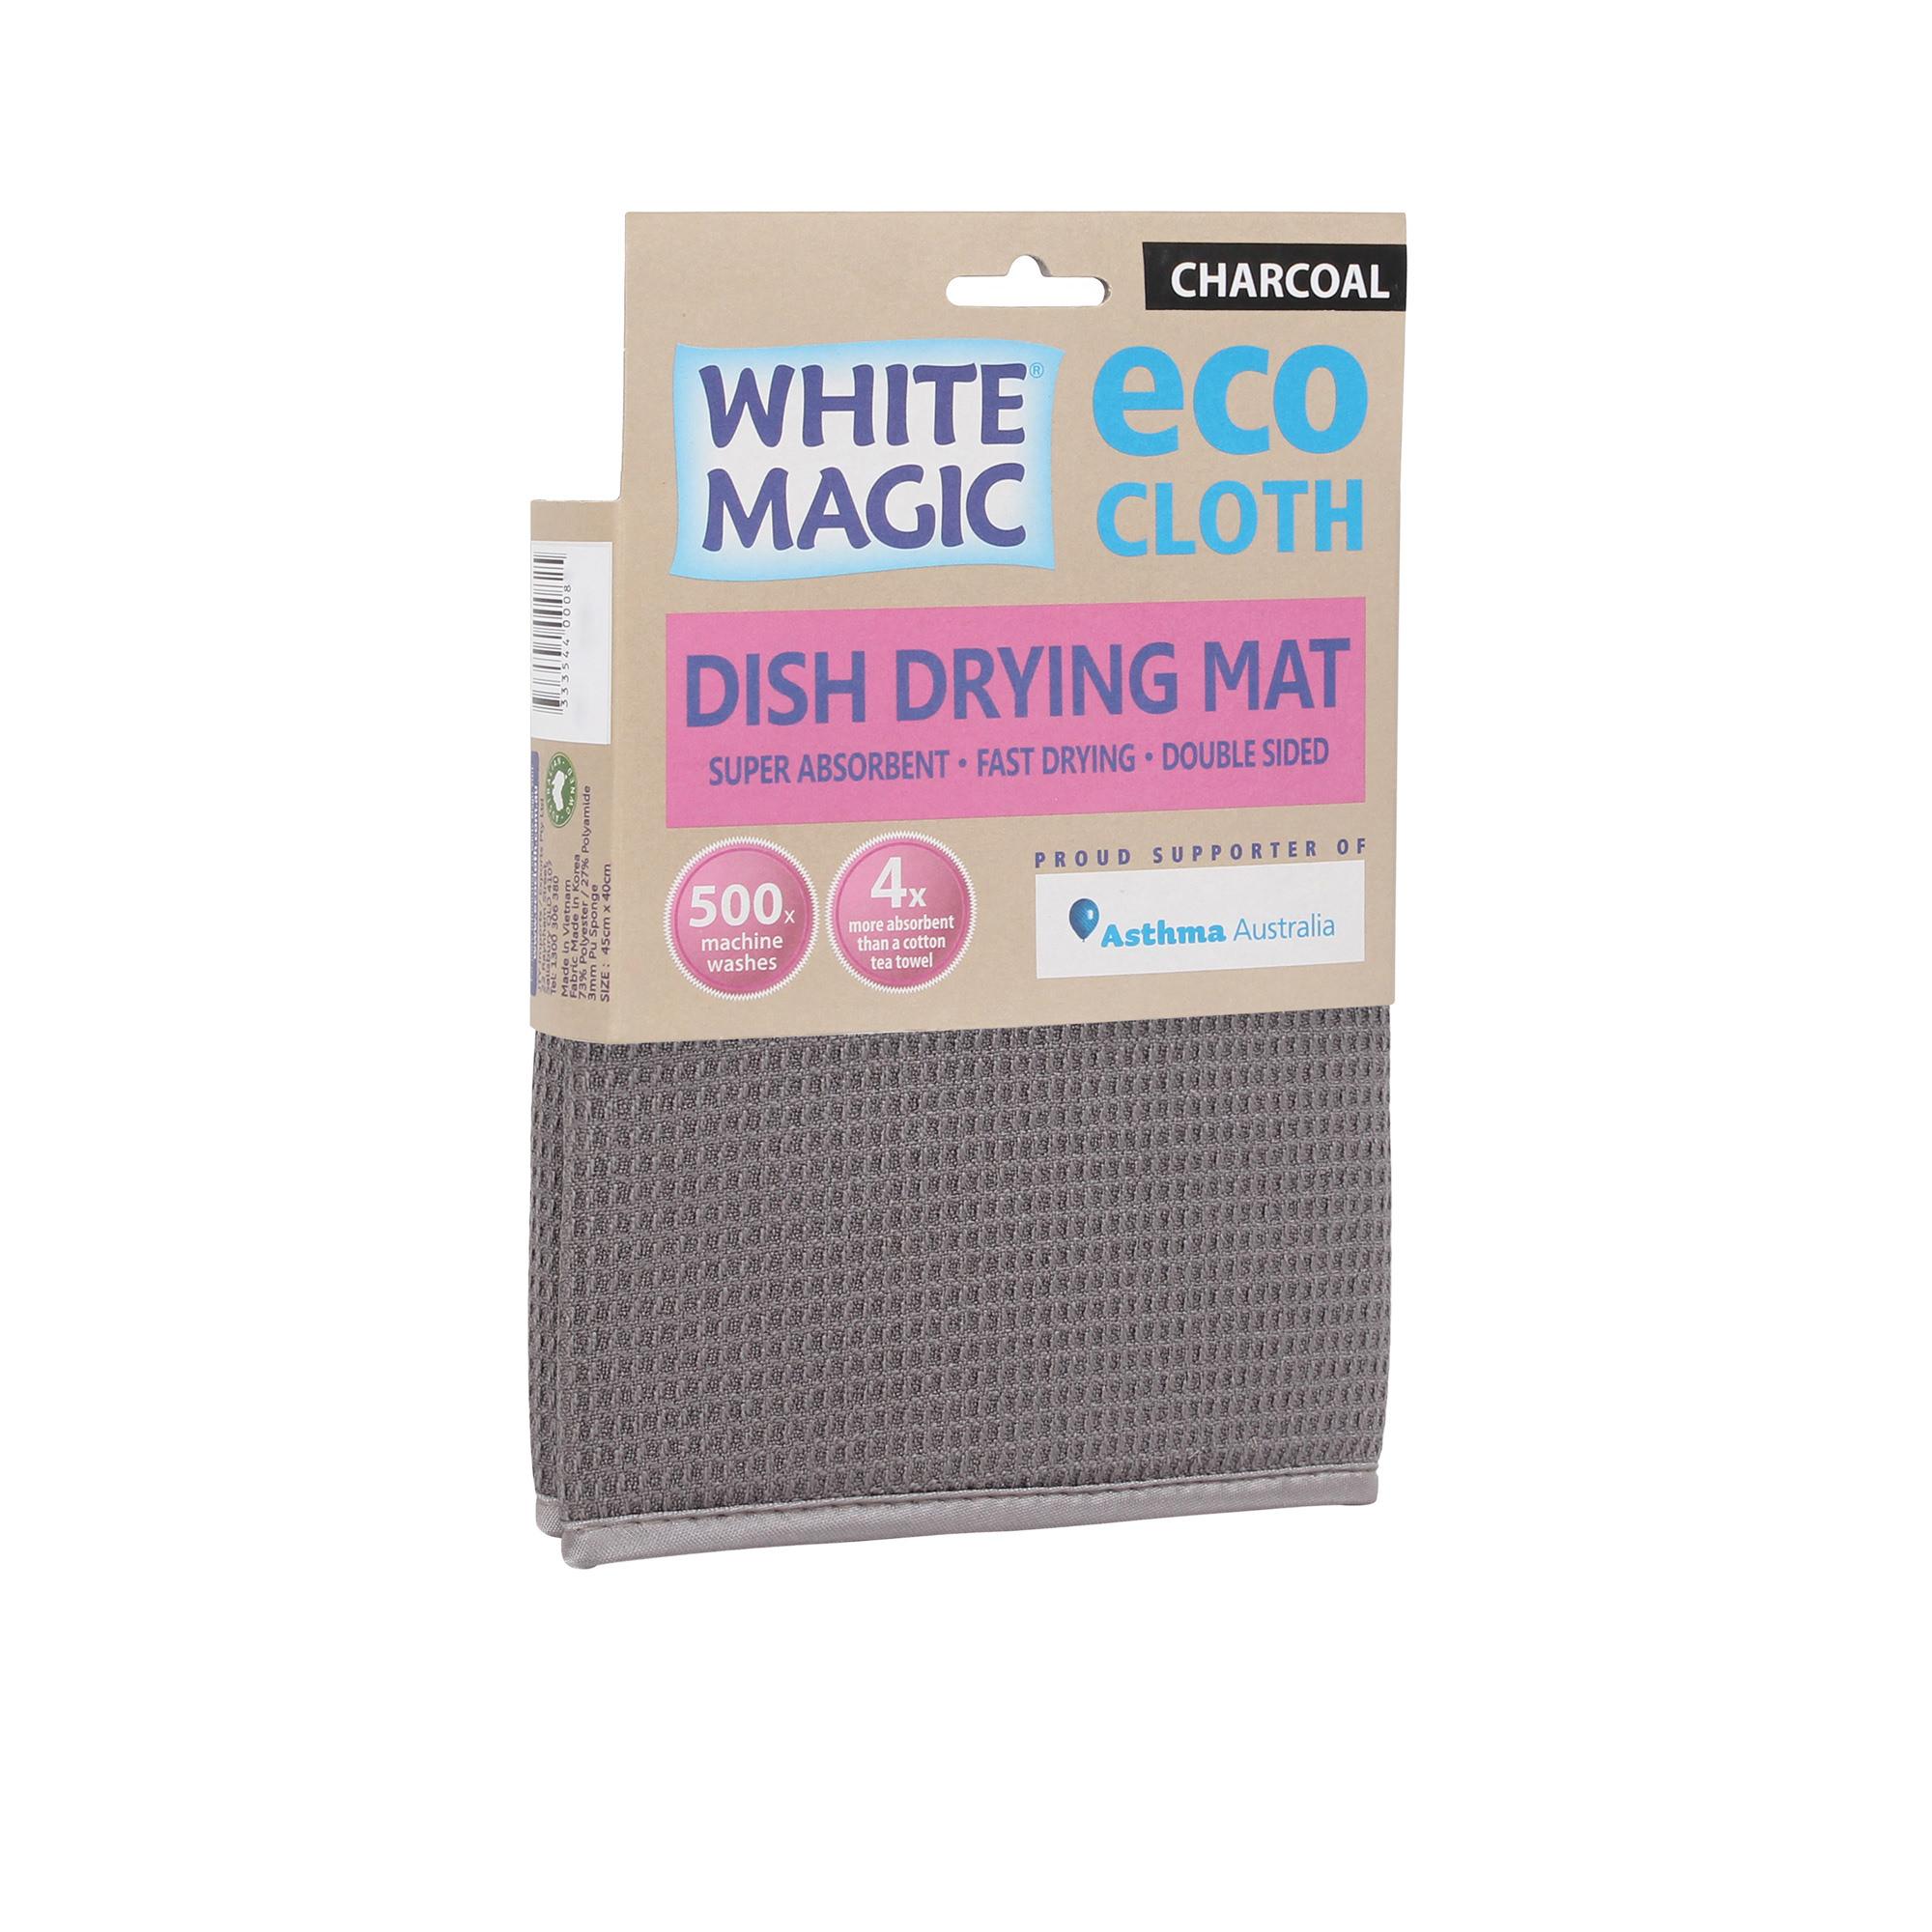 White Magic Eco Cloth Dish Drying Mat Charcoal Image 3